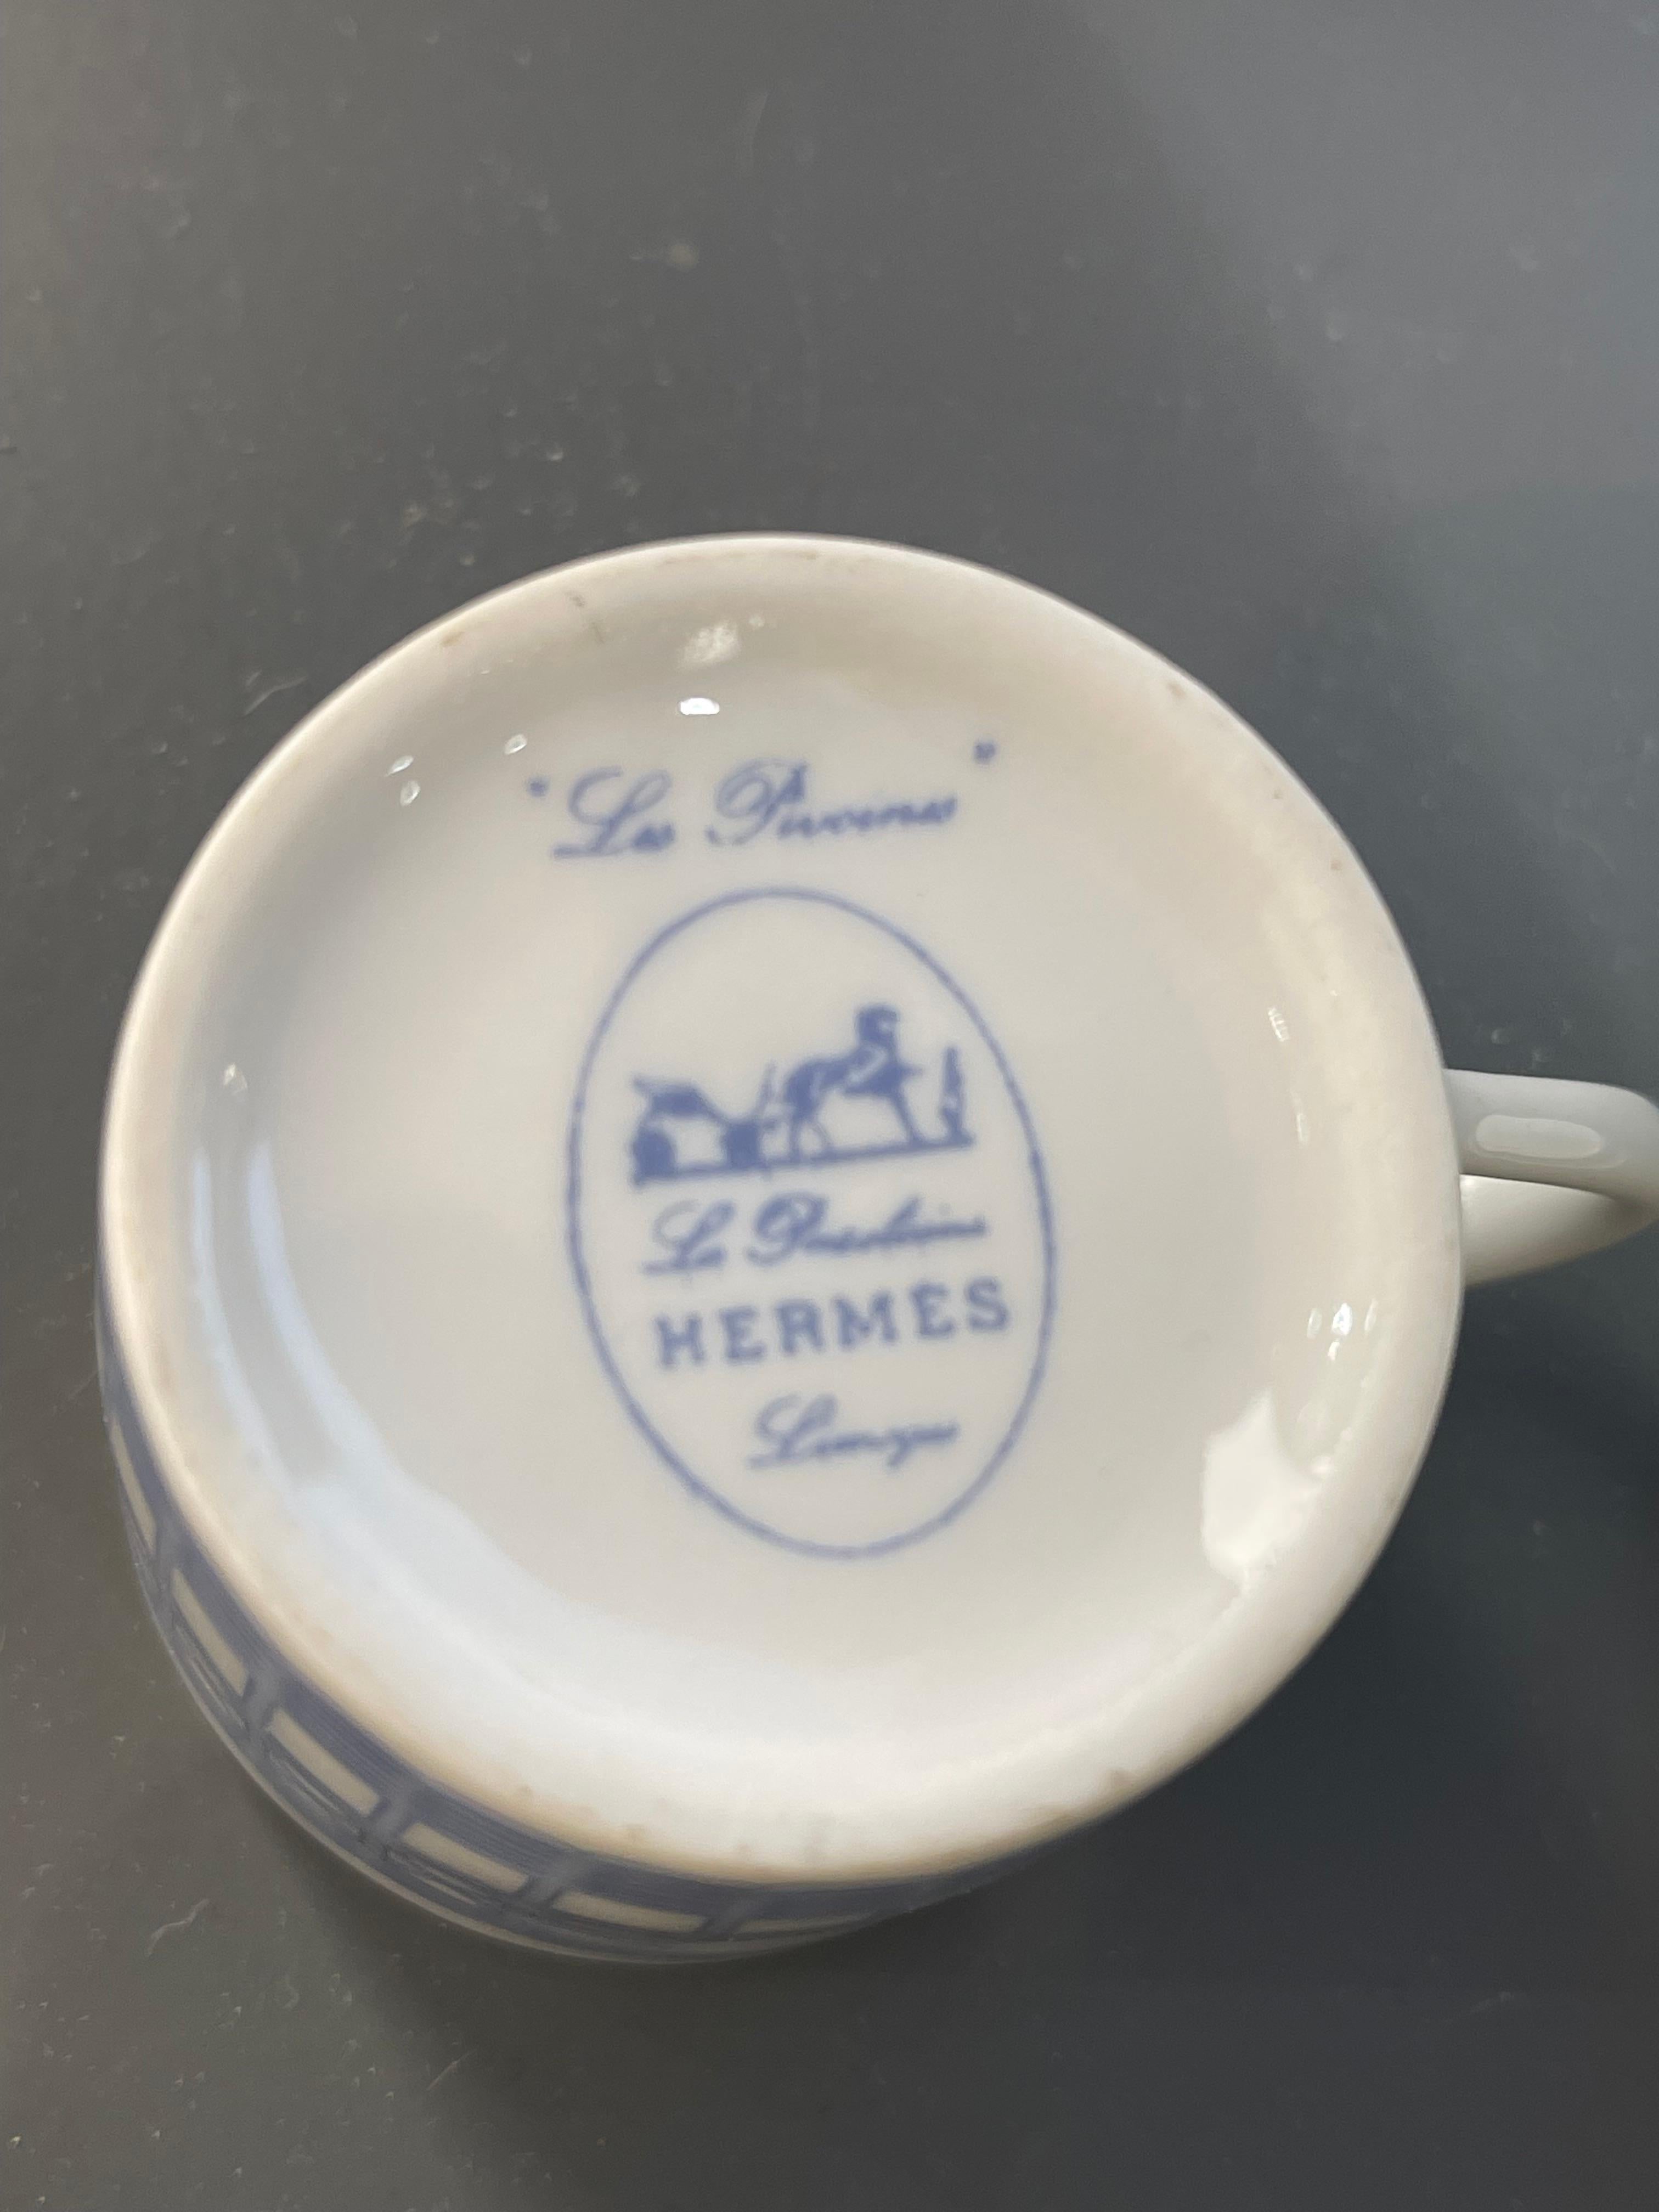 Hermès
Porcelain 